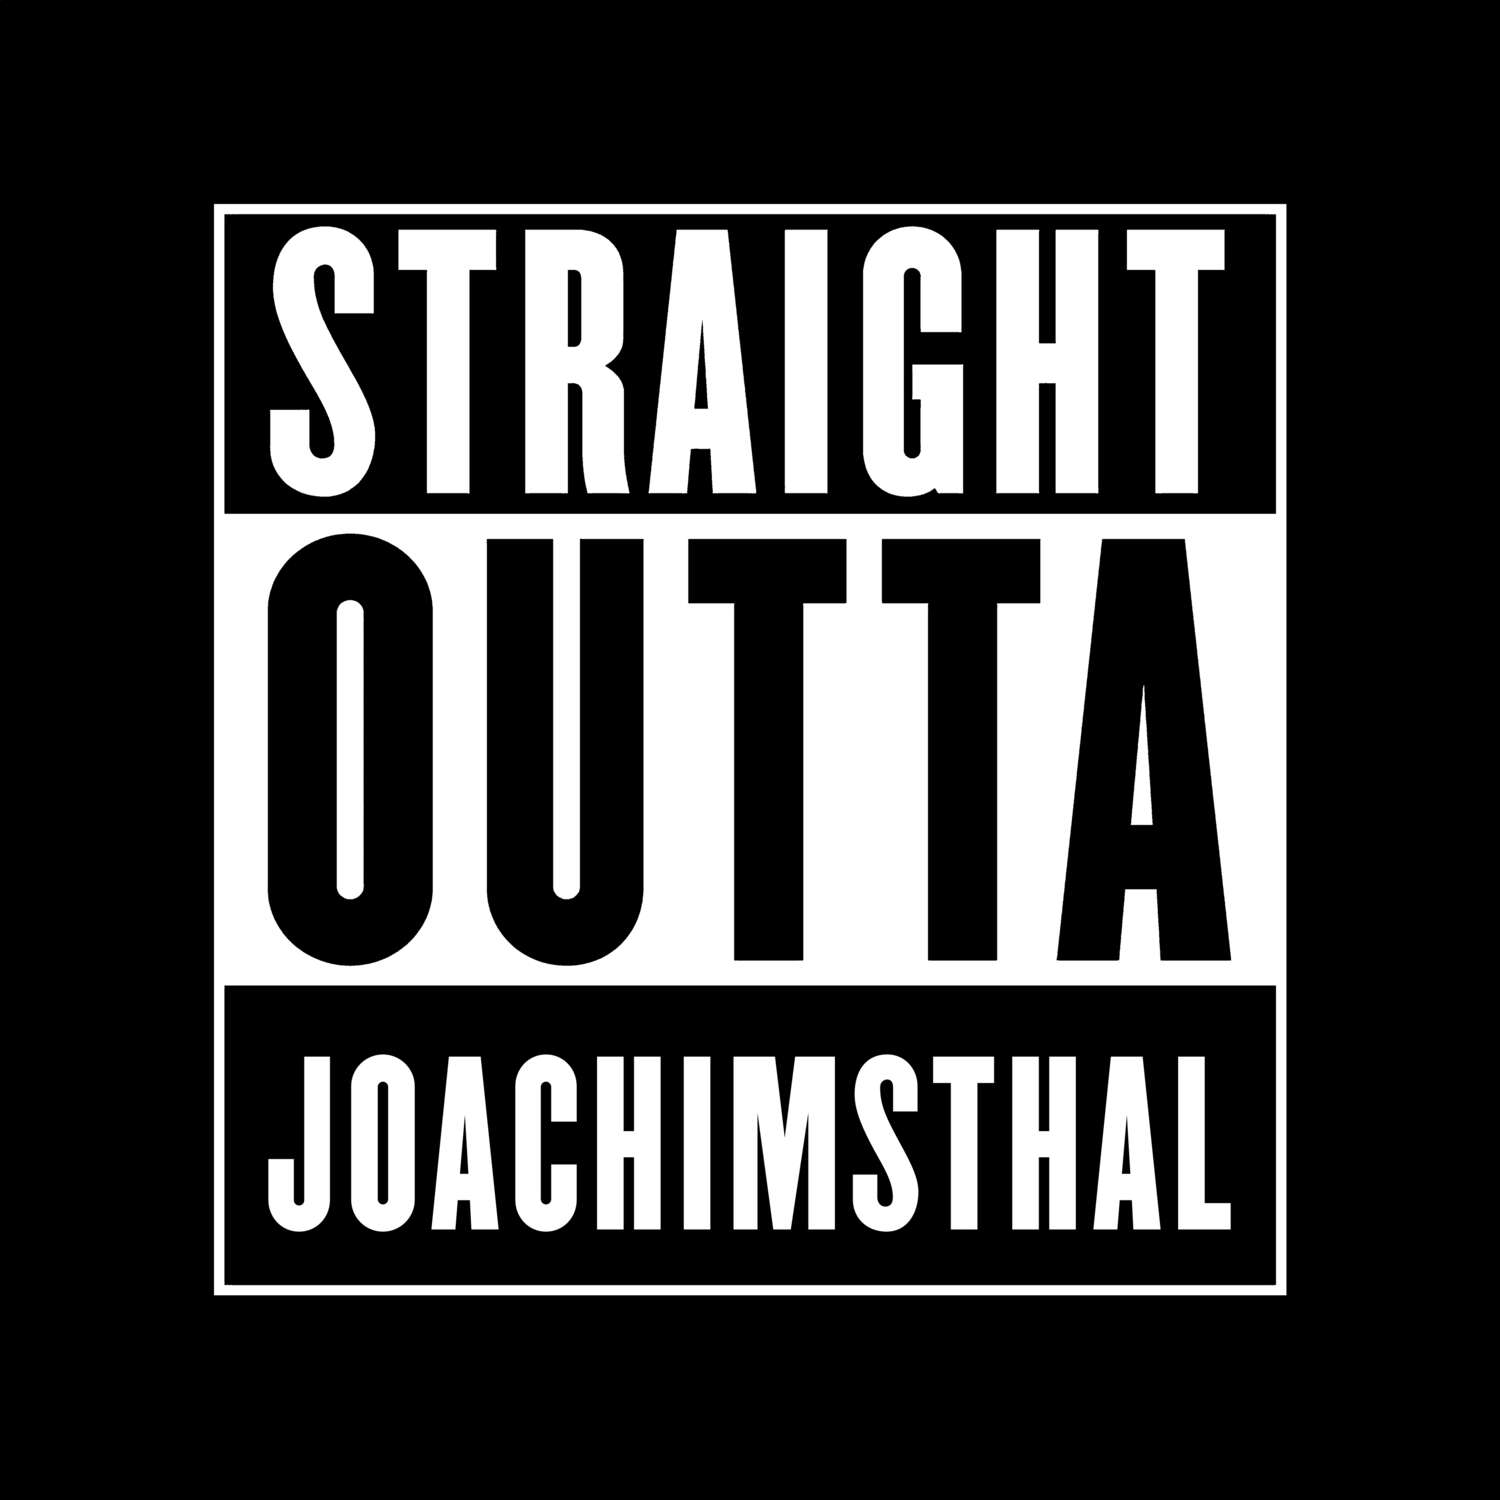 Joachimsthal T-Shirt »Straight Outta«